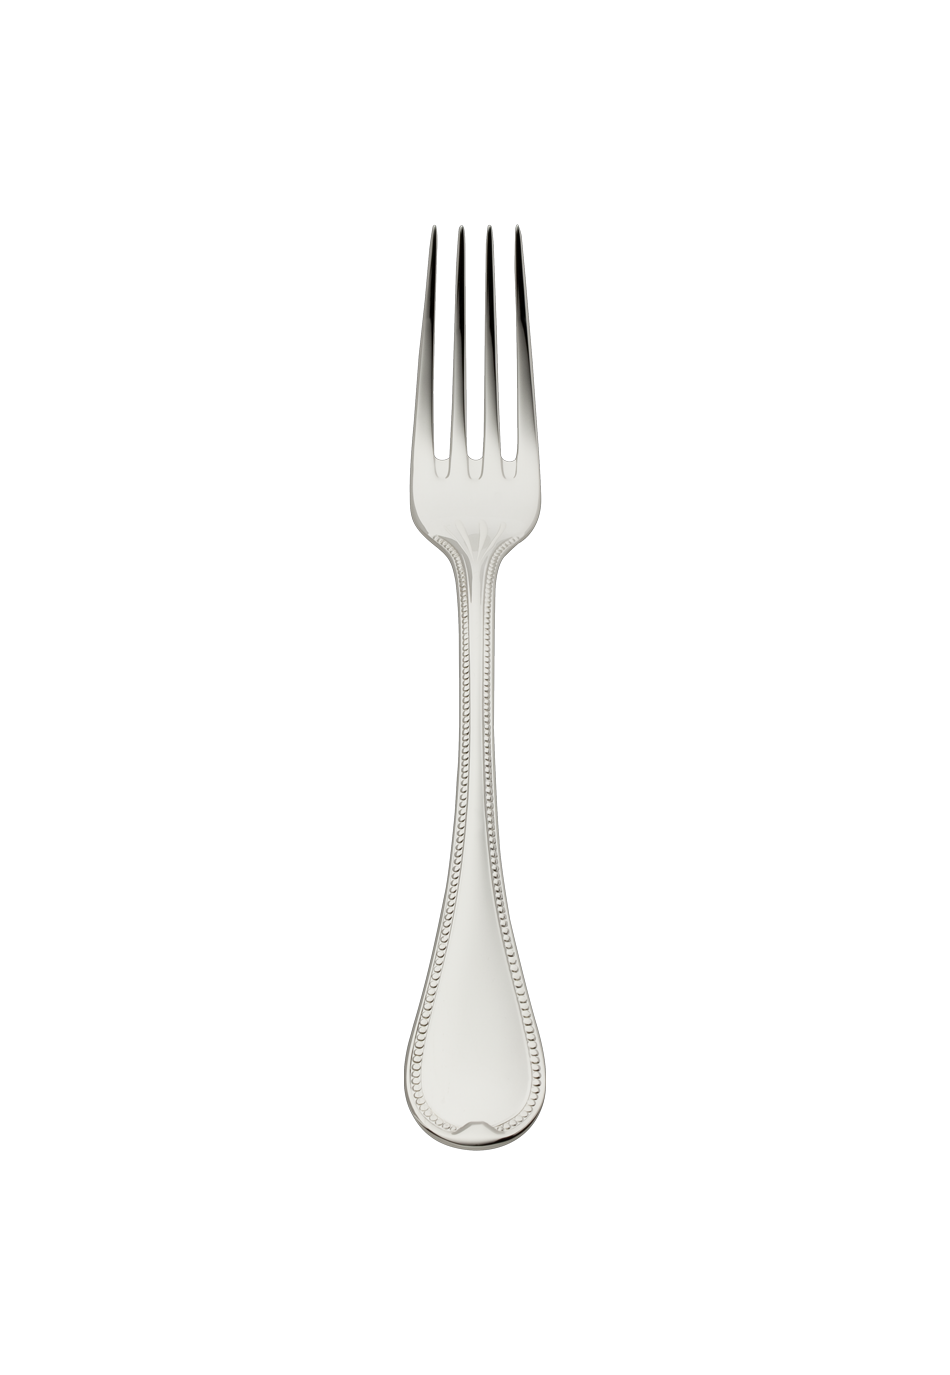 Franz. Perl Menu Fork (150g massive silverplated)